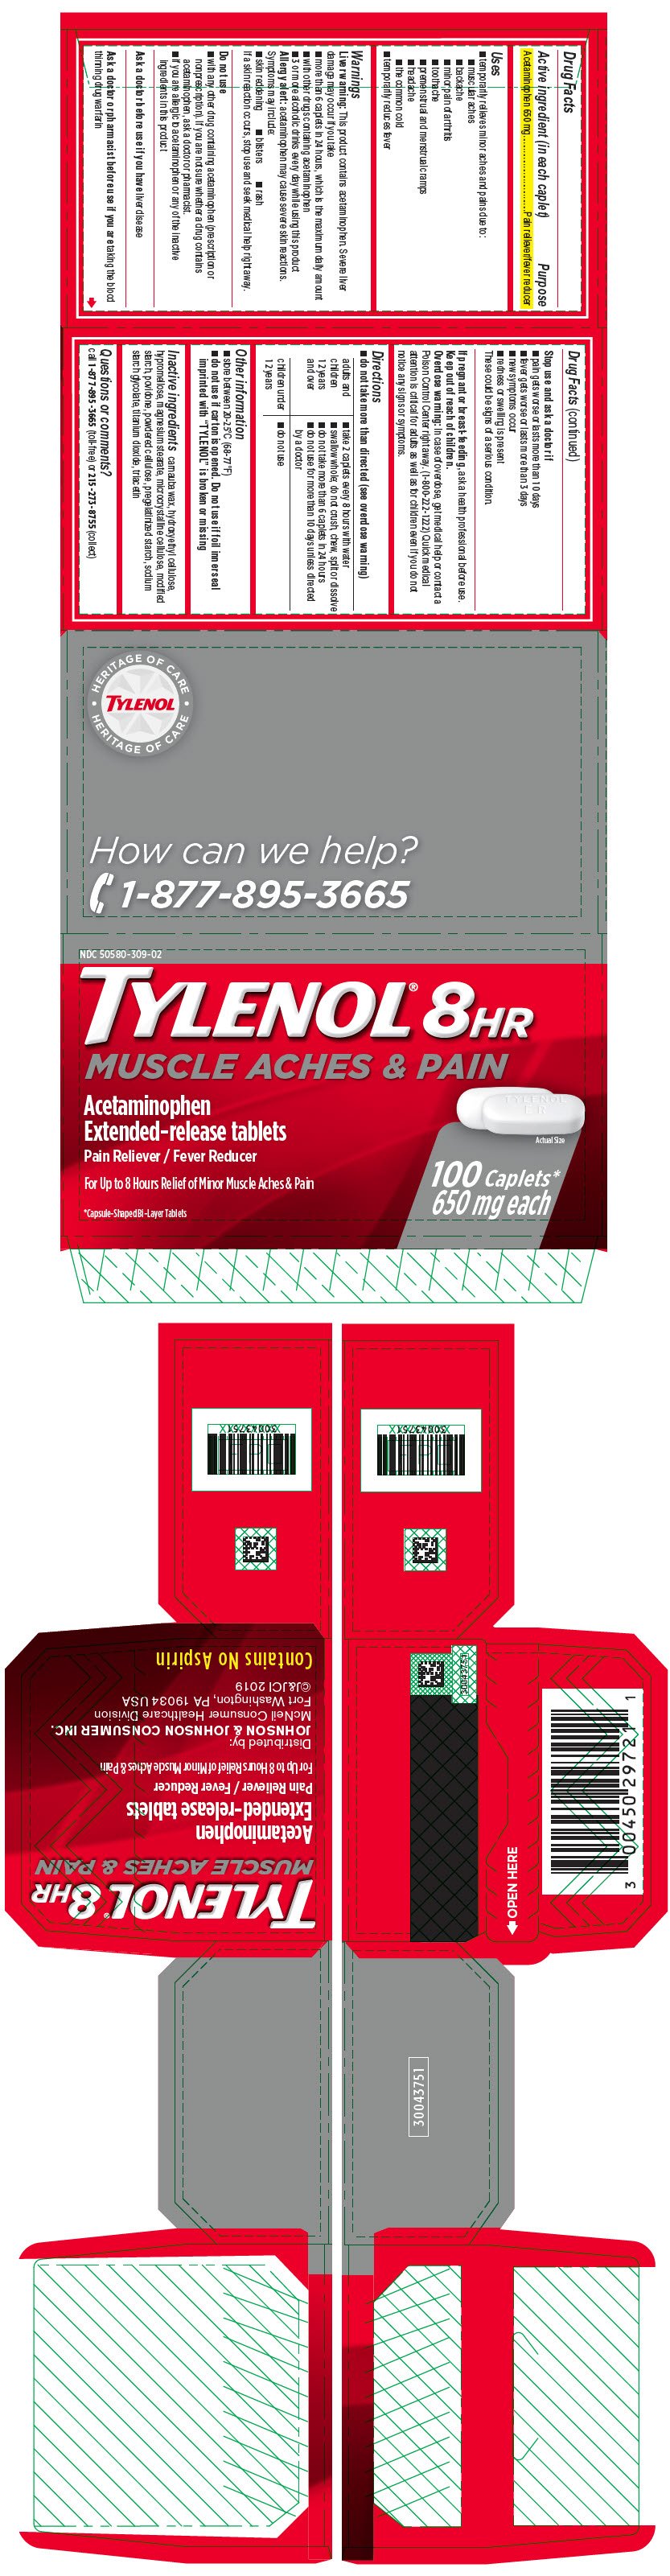 Tylenol 8 Hour Arthritis Joint Pain Acetaminophen Tablets